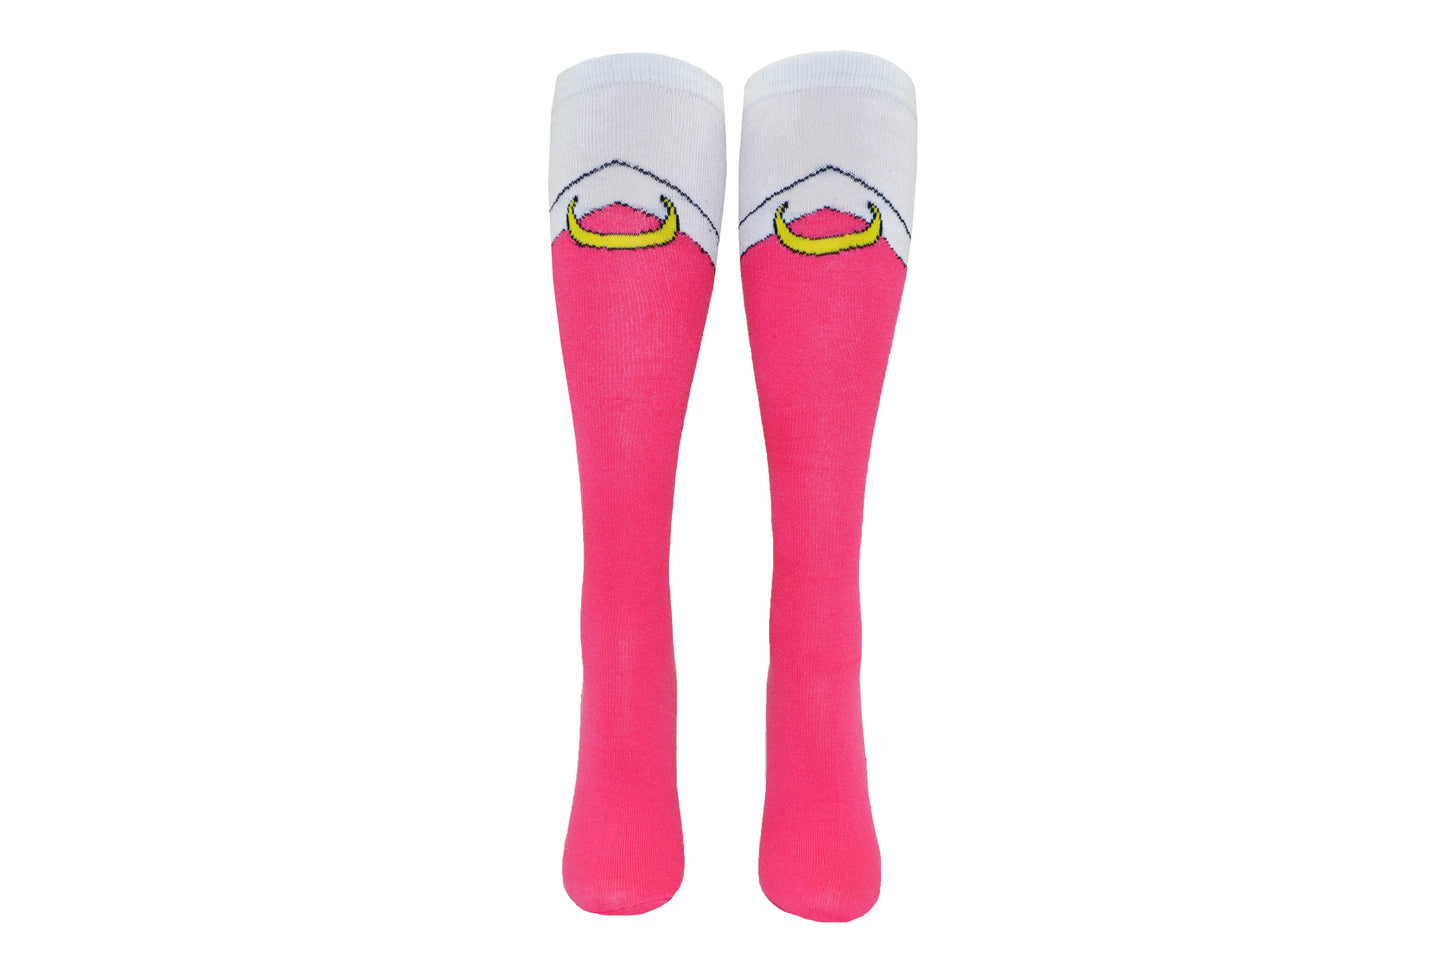 Socks: Sailor Moon Anime Pink Cosplay Knee High